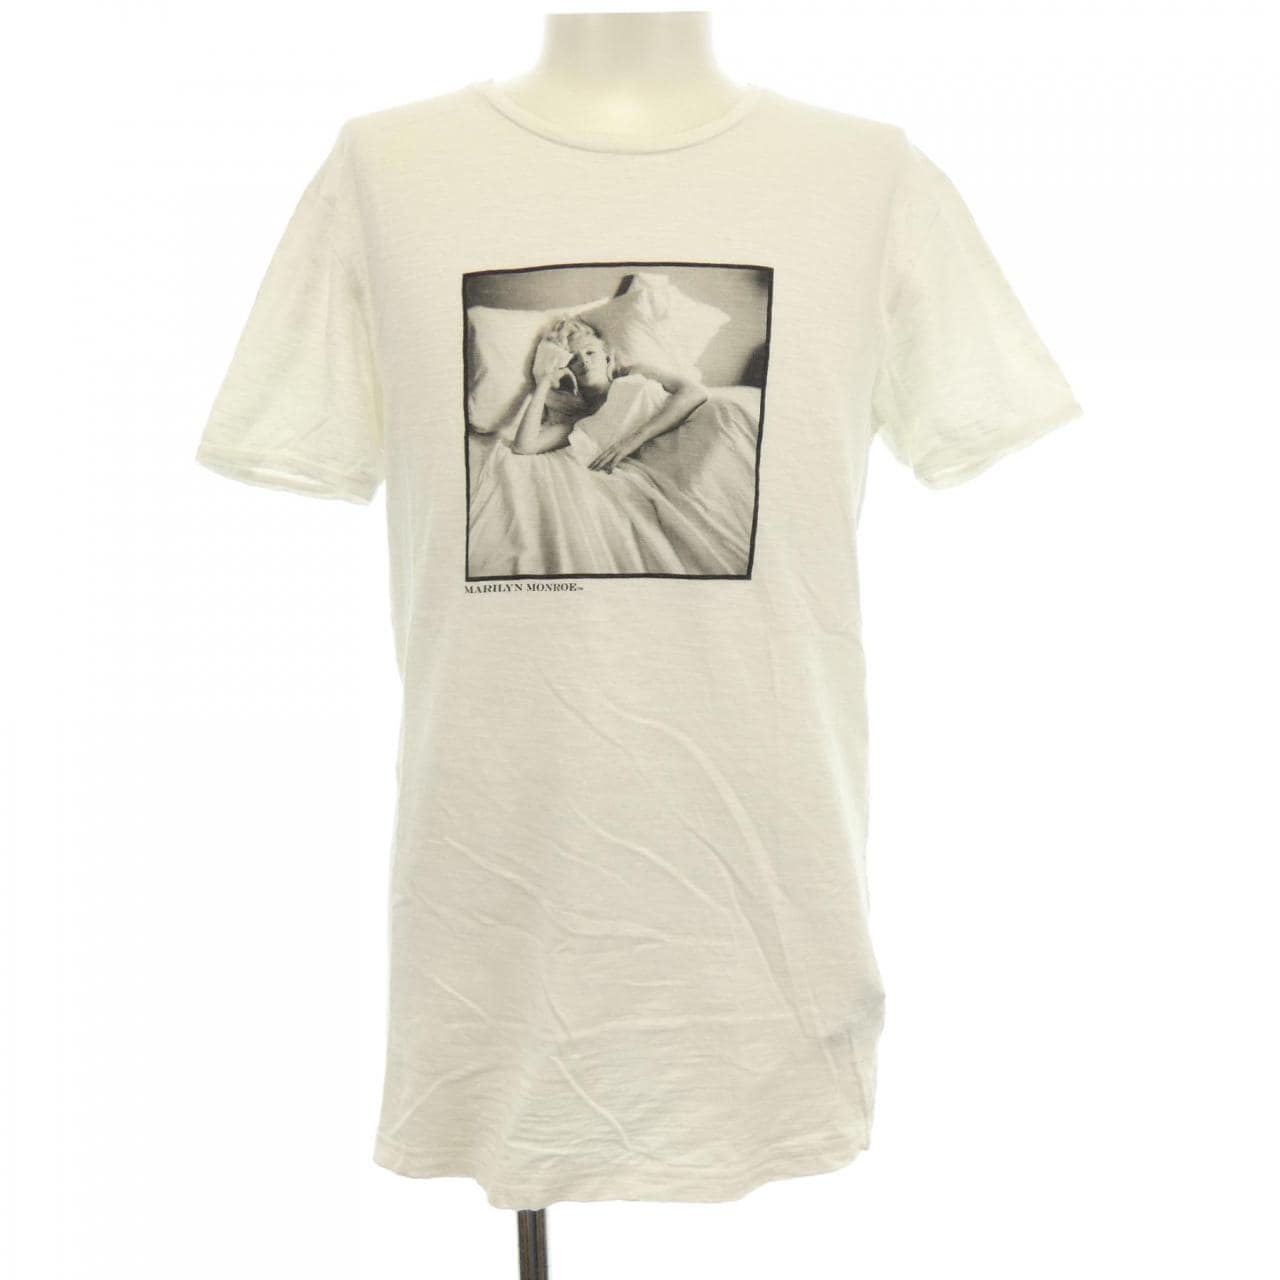 DOLCE&GABBANA tシャツTシャツ/カットソー(半袖/袖なし)